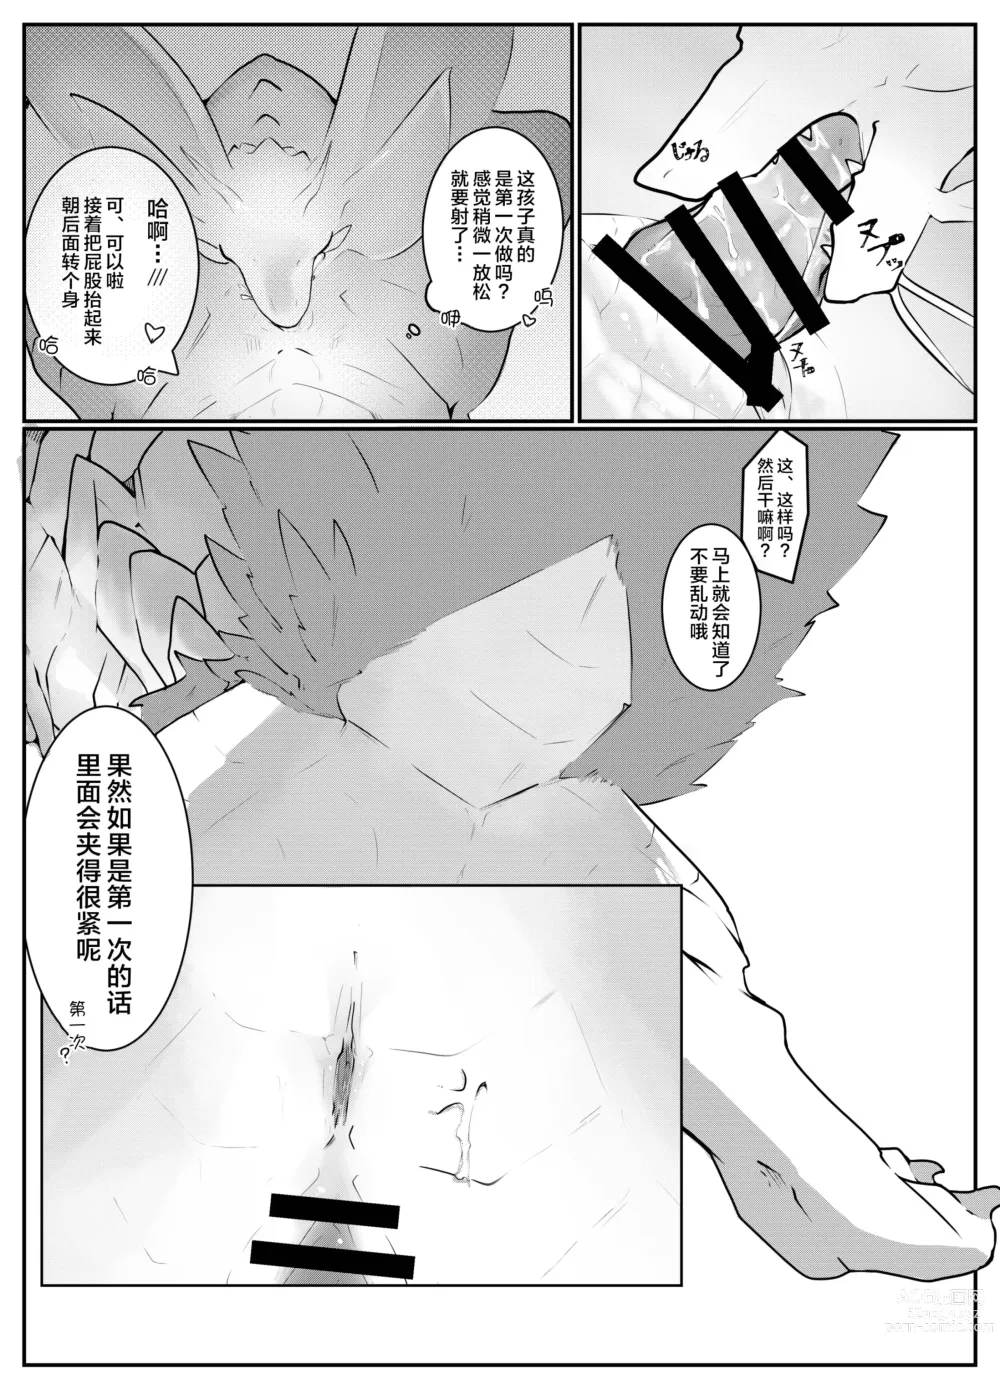 Page 6 of doujinshi 泡沫